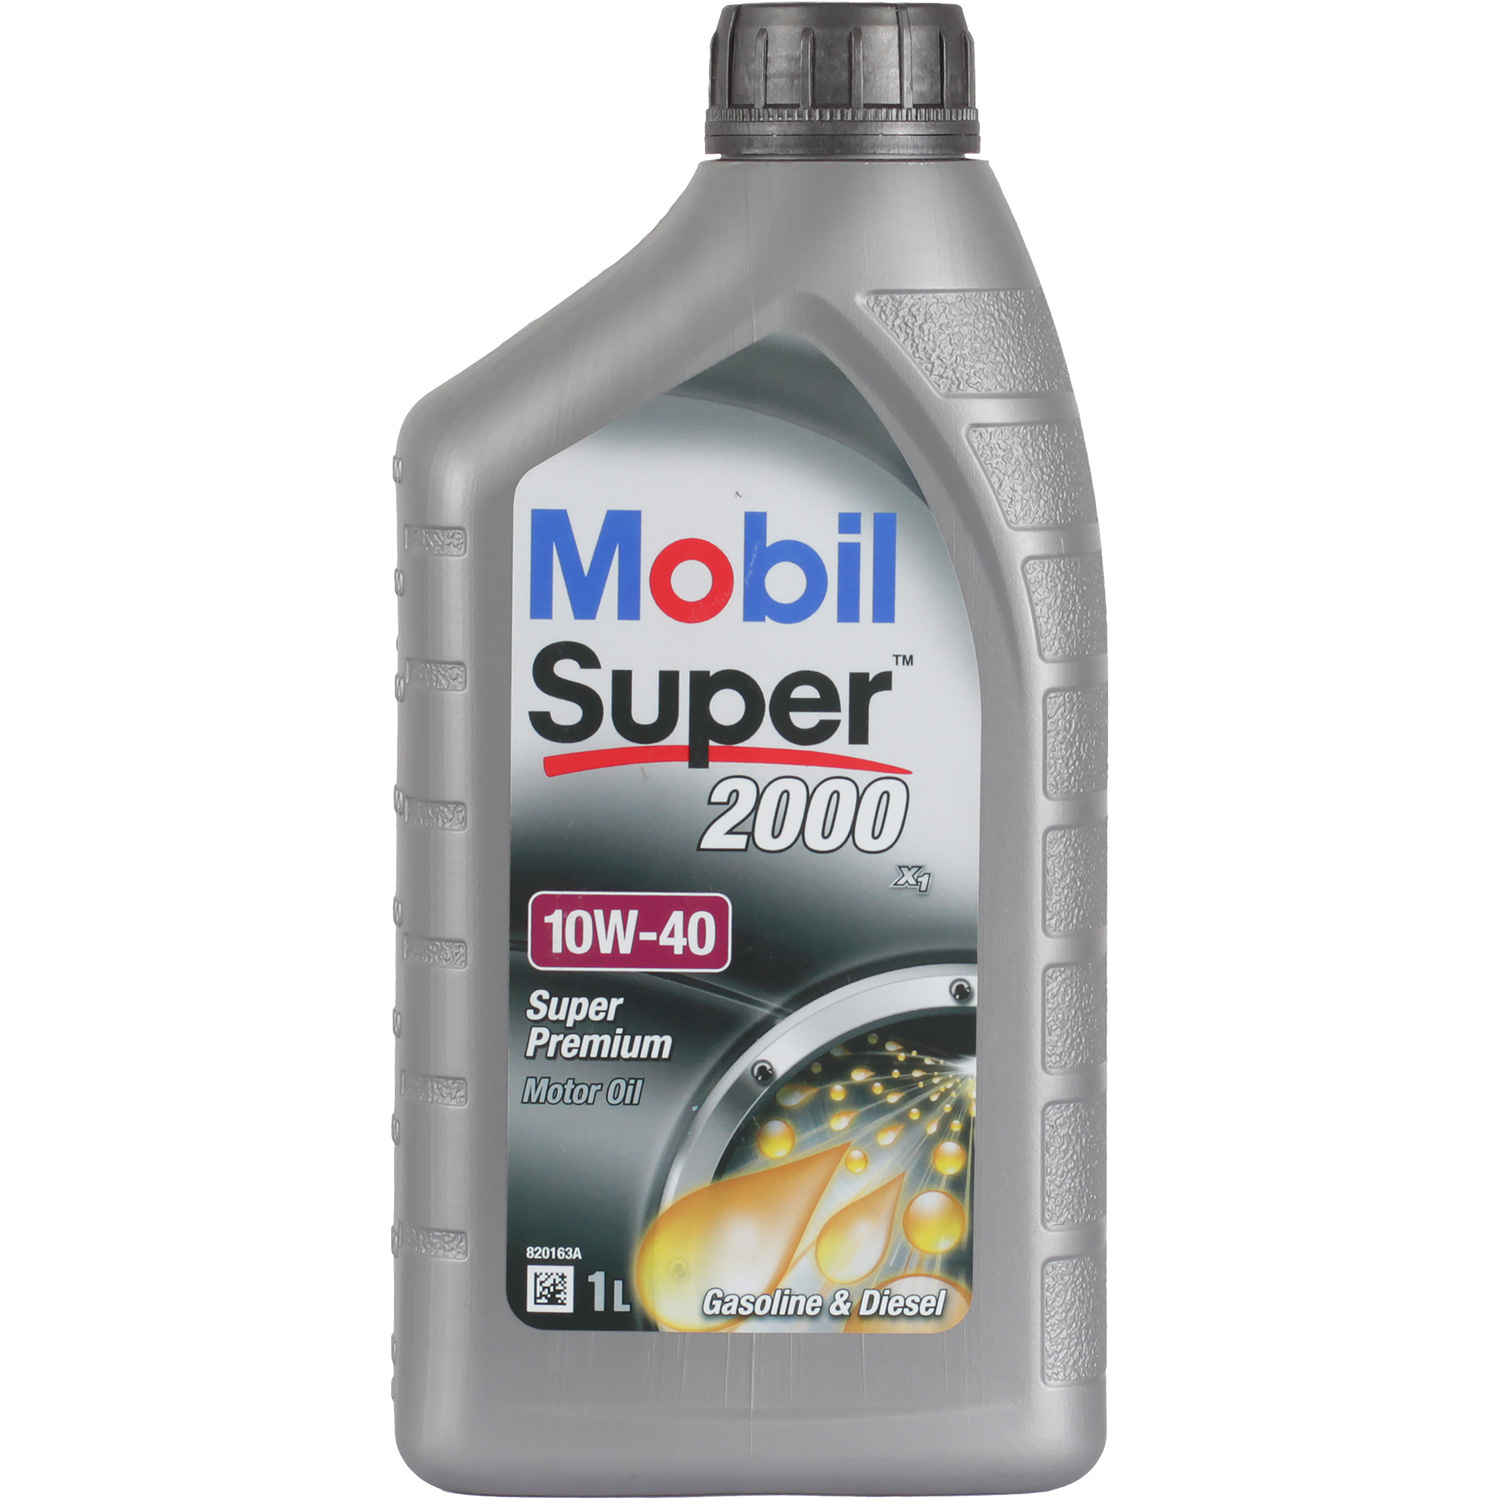 Mobil Моторное масло Mobil Super 2000 X1 10W-40, 1 л цена и фото